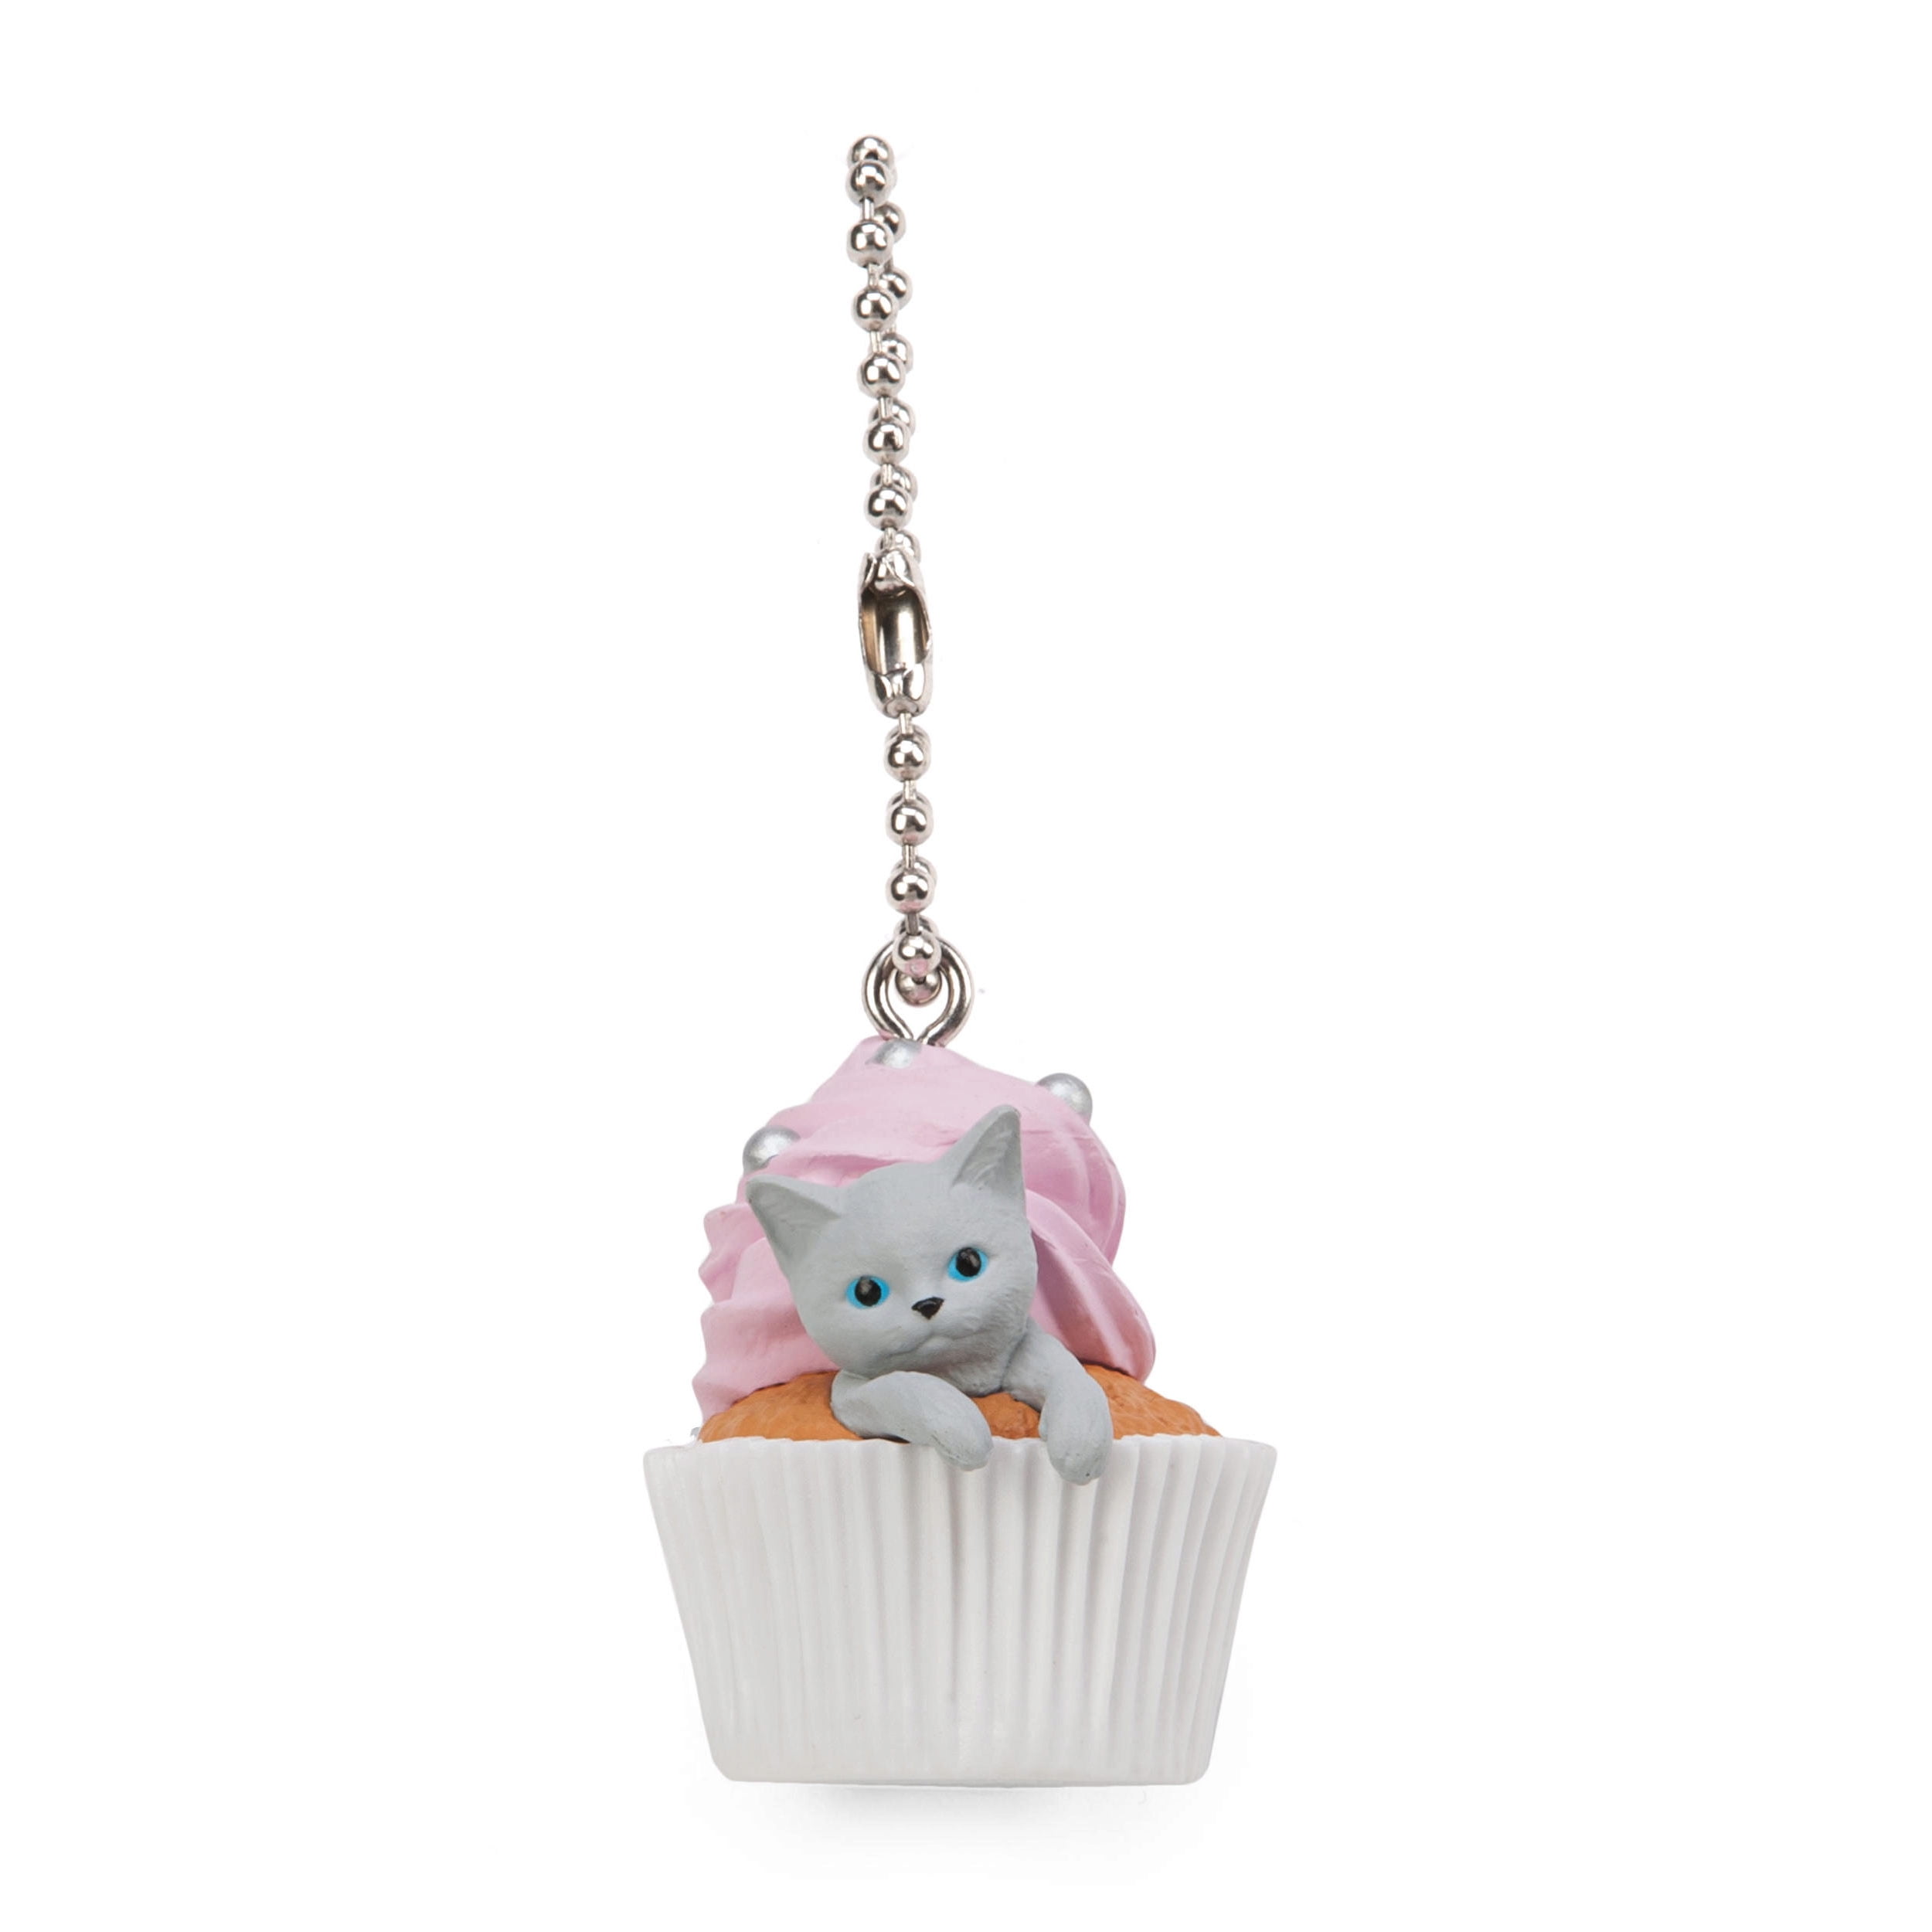 Bandai Cat  Cafe  5 Series Pink  Cupcake Figure Keychain 